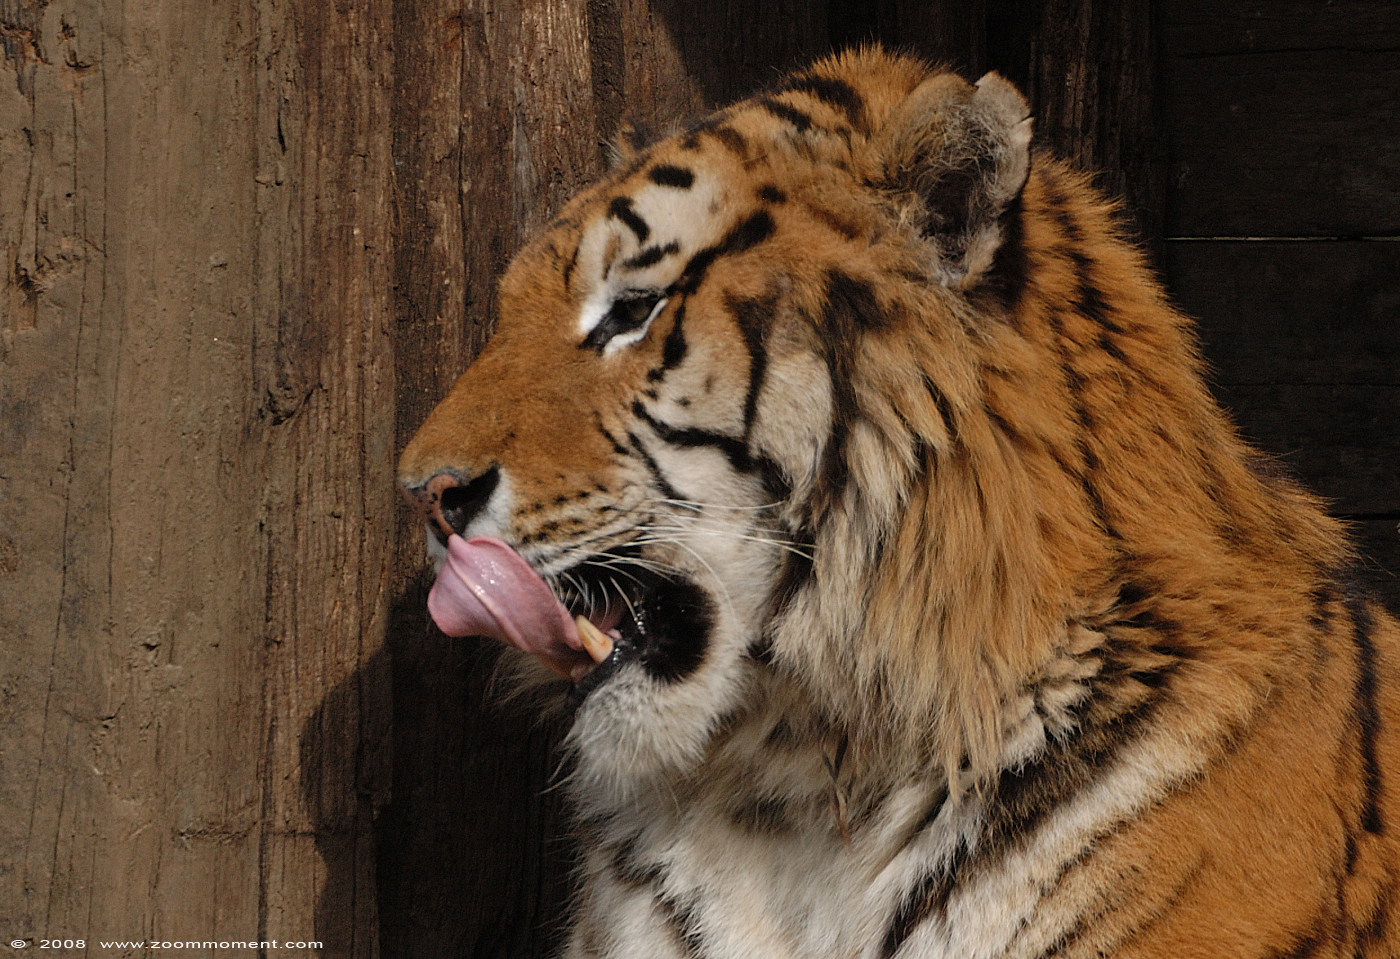 Siberische tijger ( Panthera tigris altaica ) Siberian tiger
Keywords: Olmen zoo Belgie Belgium Siberische tijger Panthera tigris altaica Siberian tiger